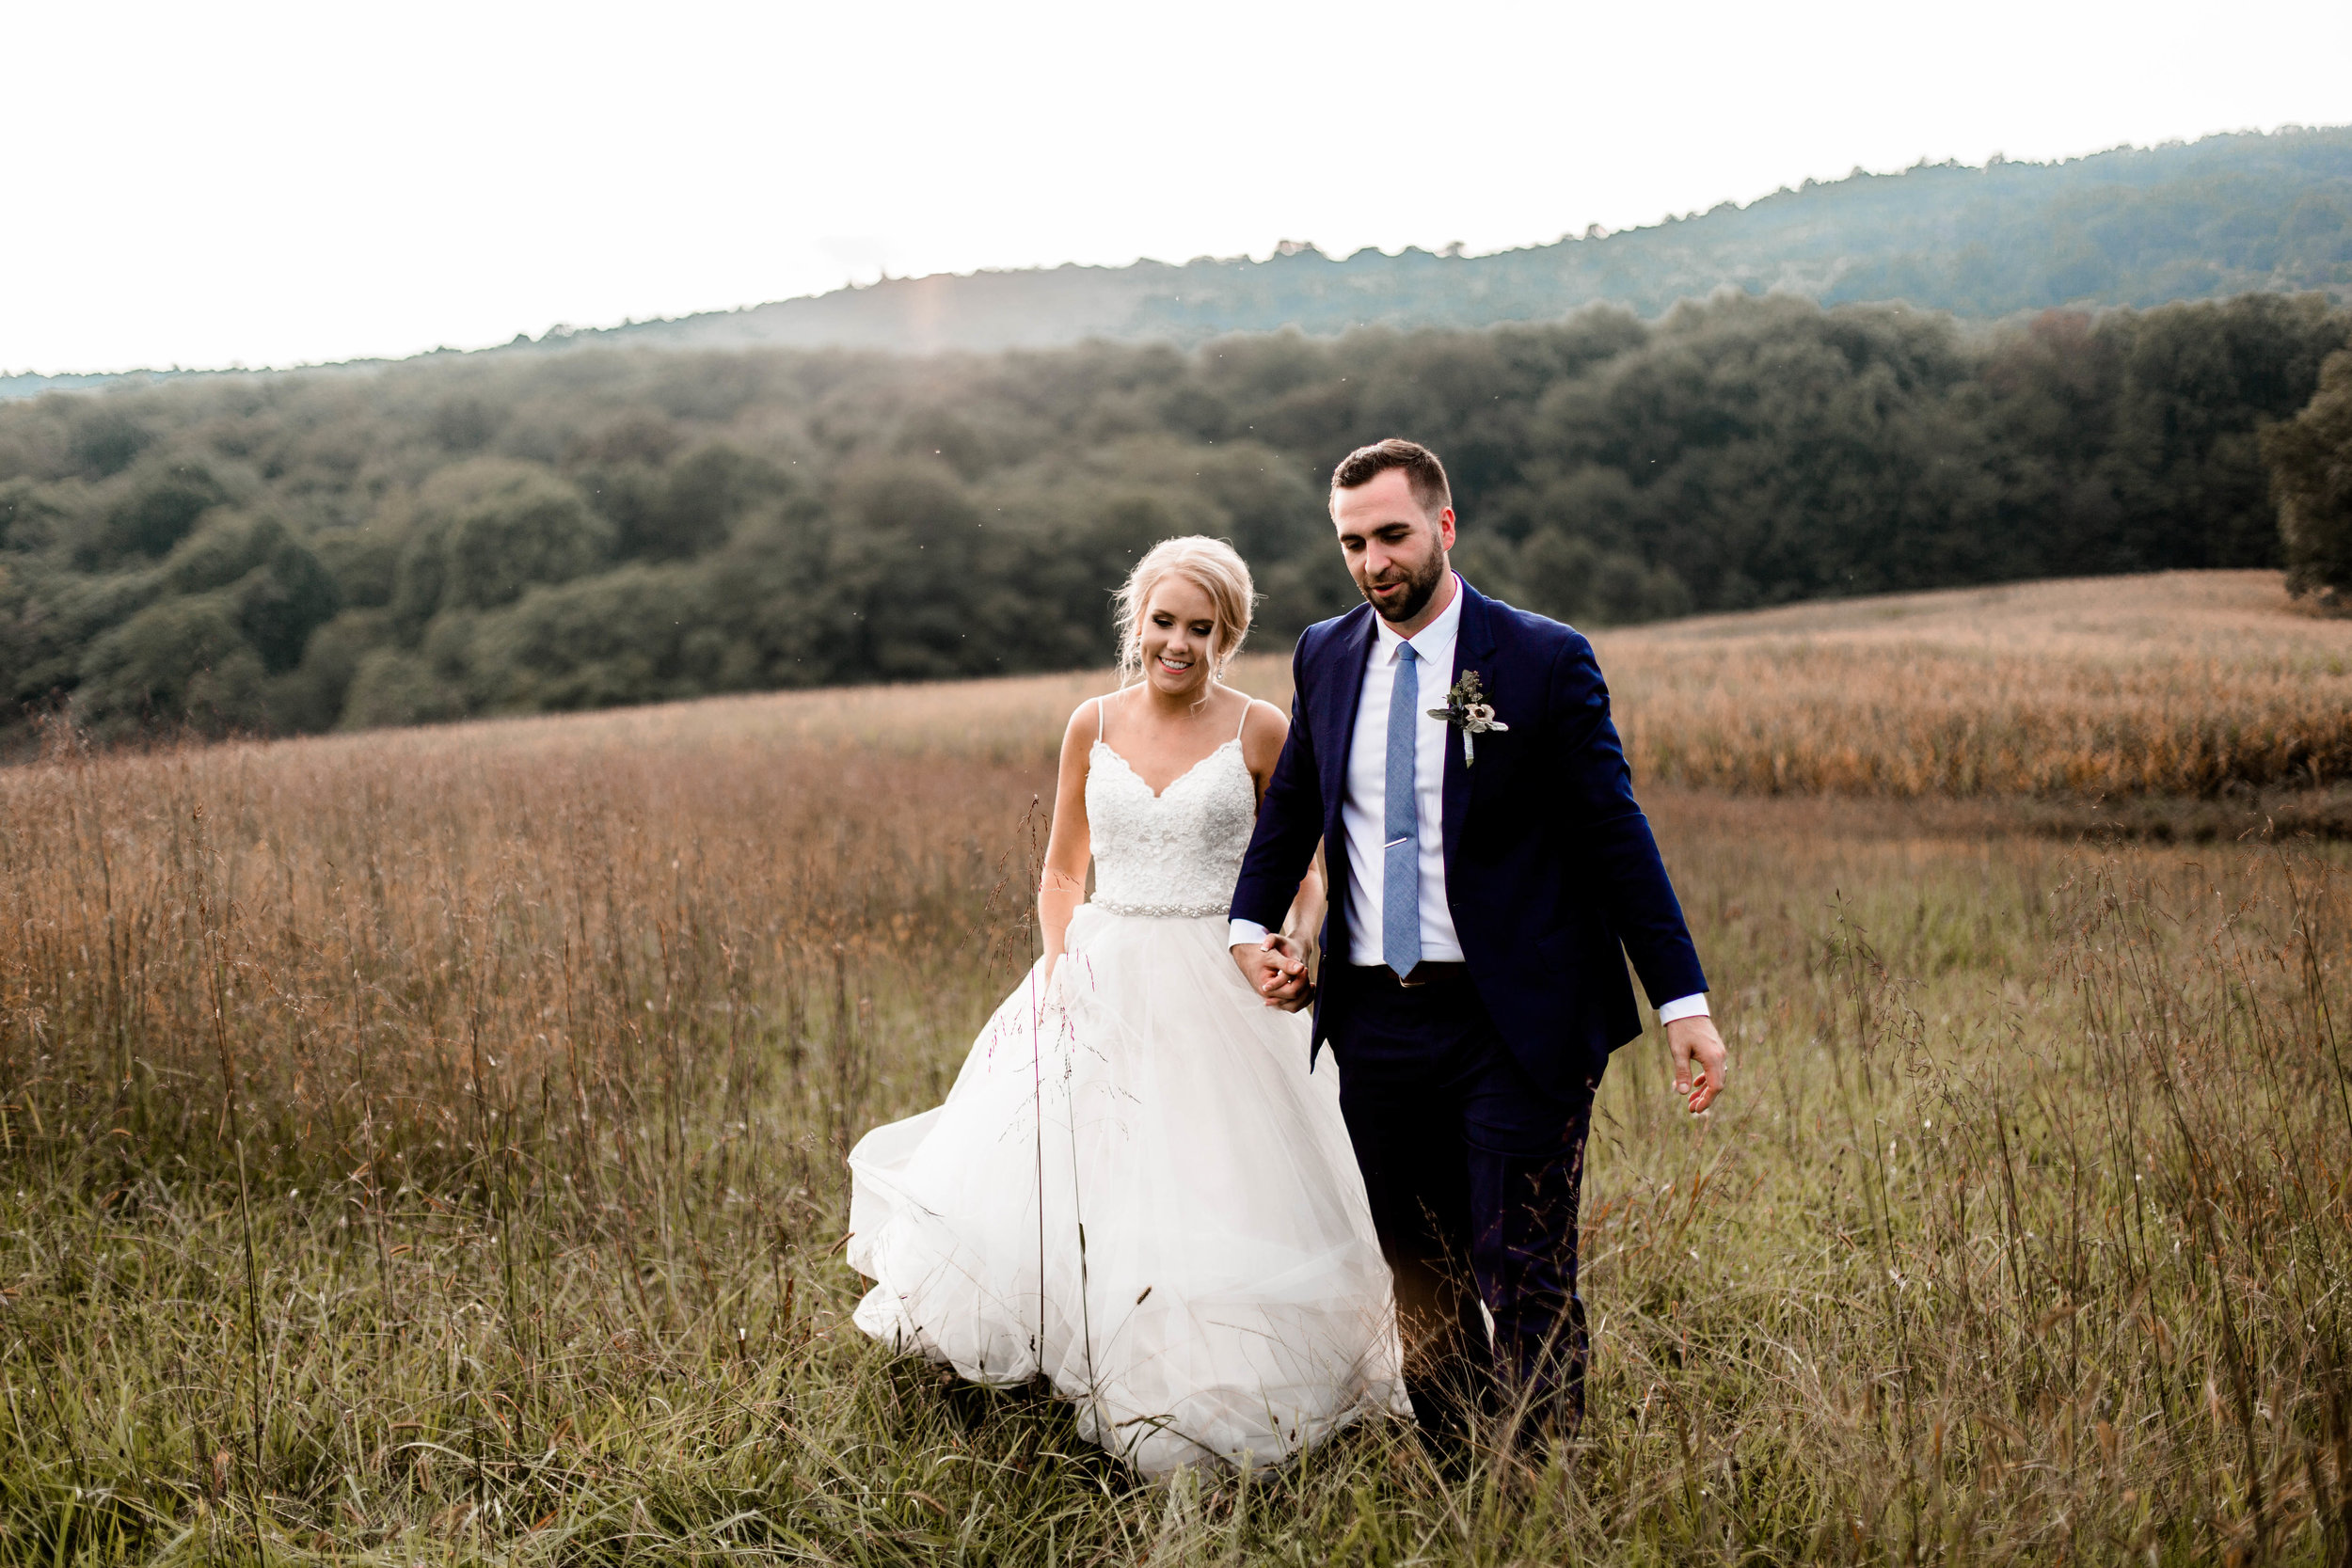 nicole-daacke-photography-intimate-wedding-in-a-lavender-field-washington-state-wedding-photographer-intimate-elopement-golden-lavender-field-wedding-photos-59.jpg